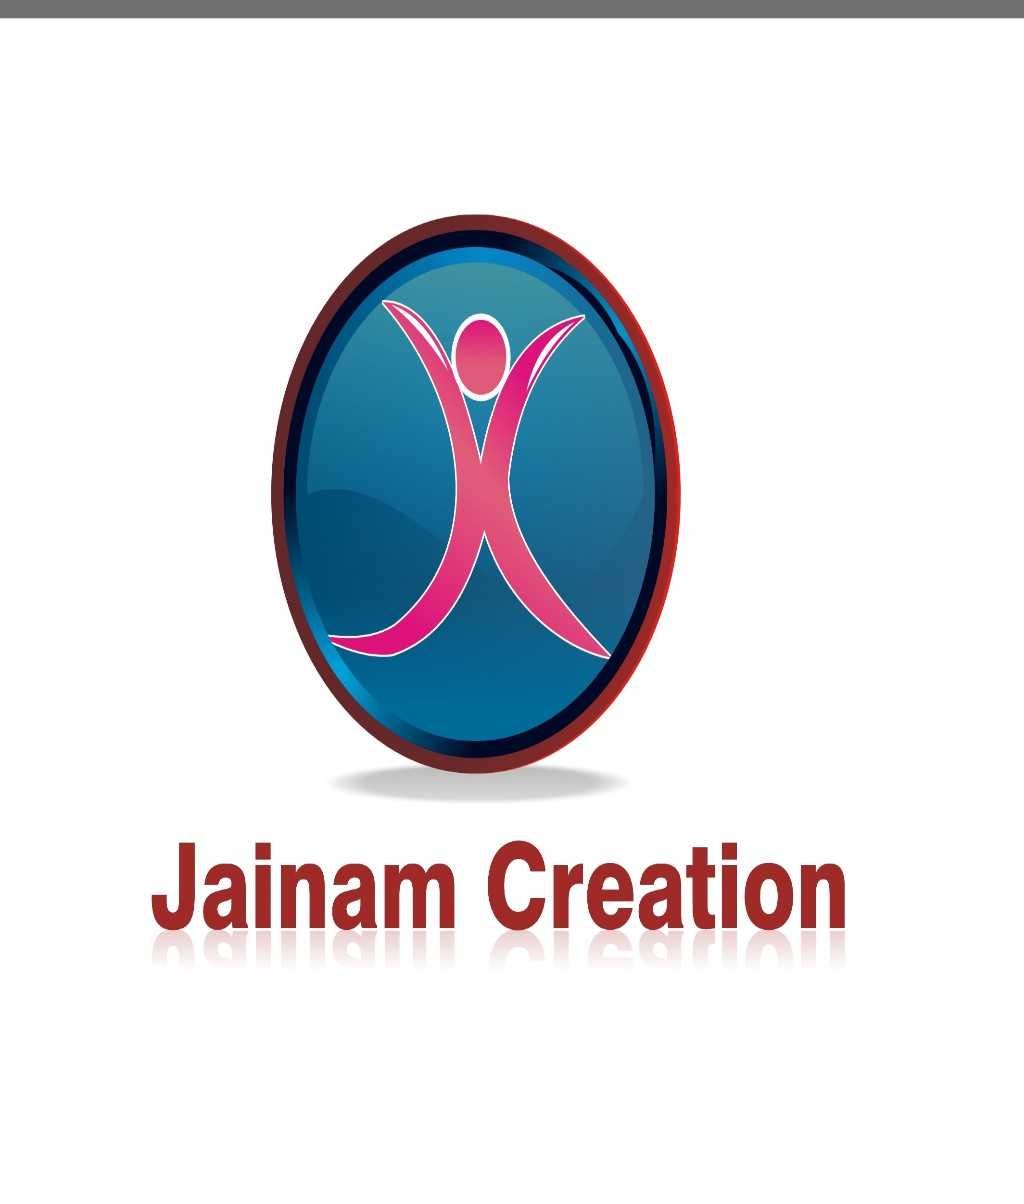 JAINAM CREATION